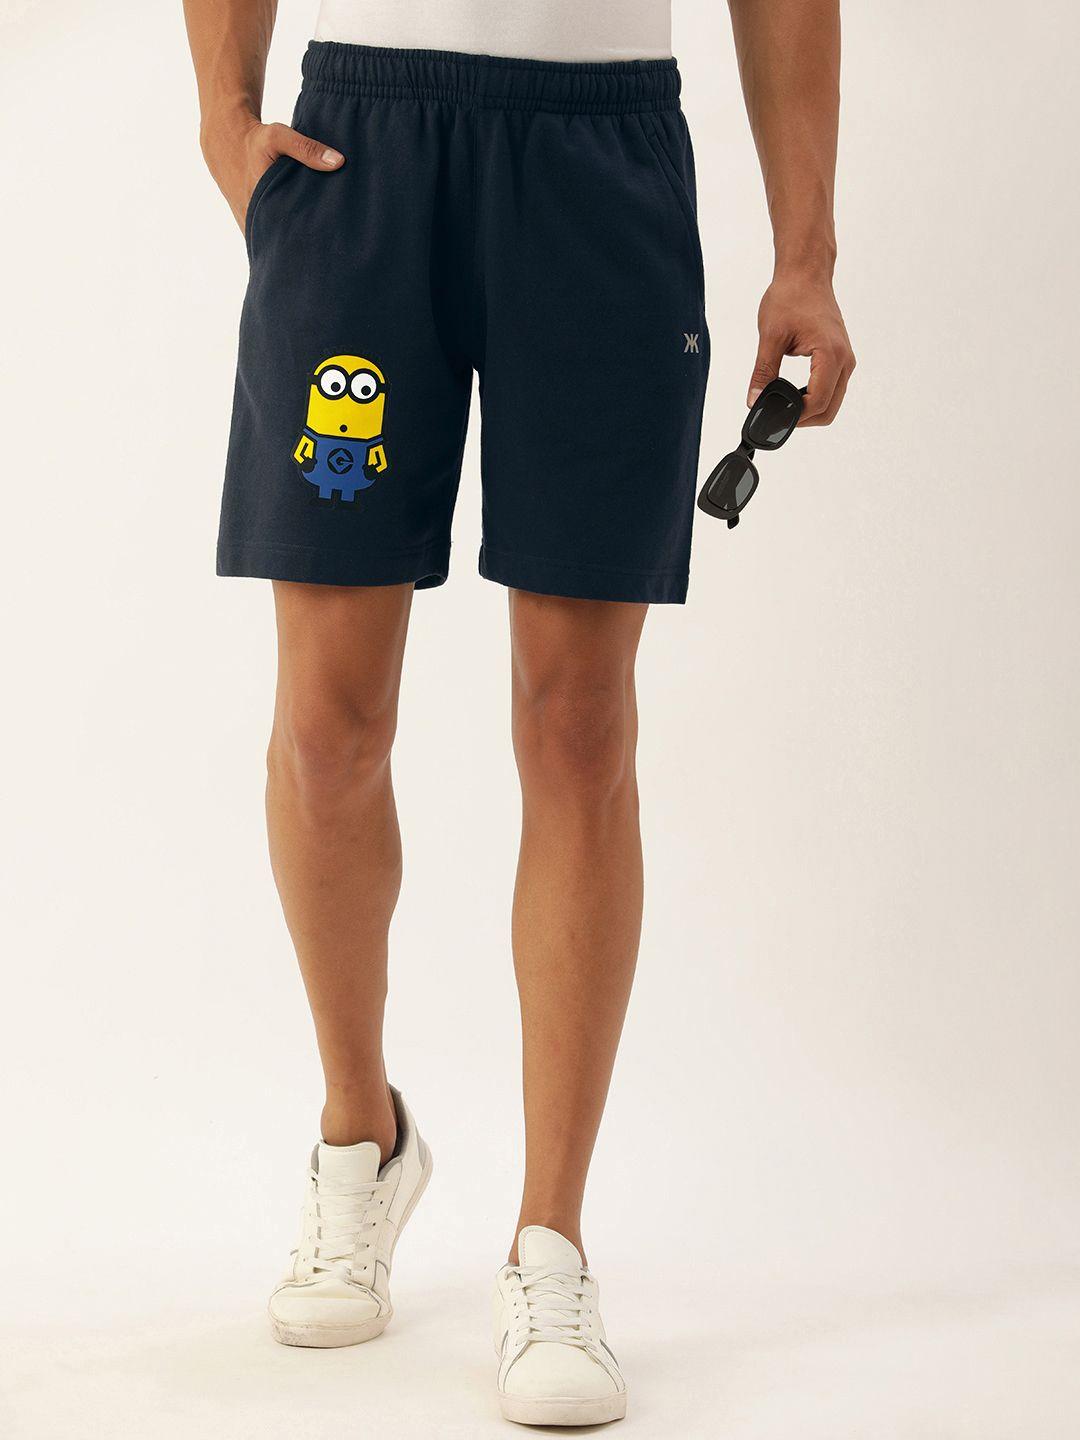 kook-n-keech-men-minions-printed-shorts